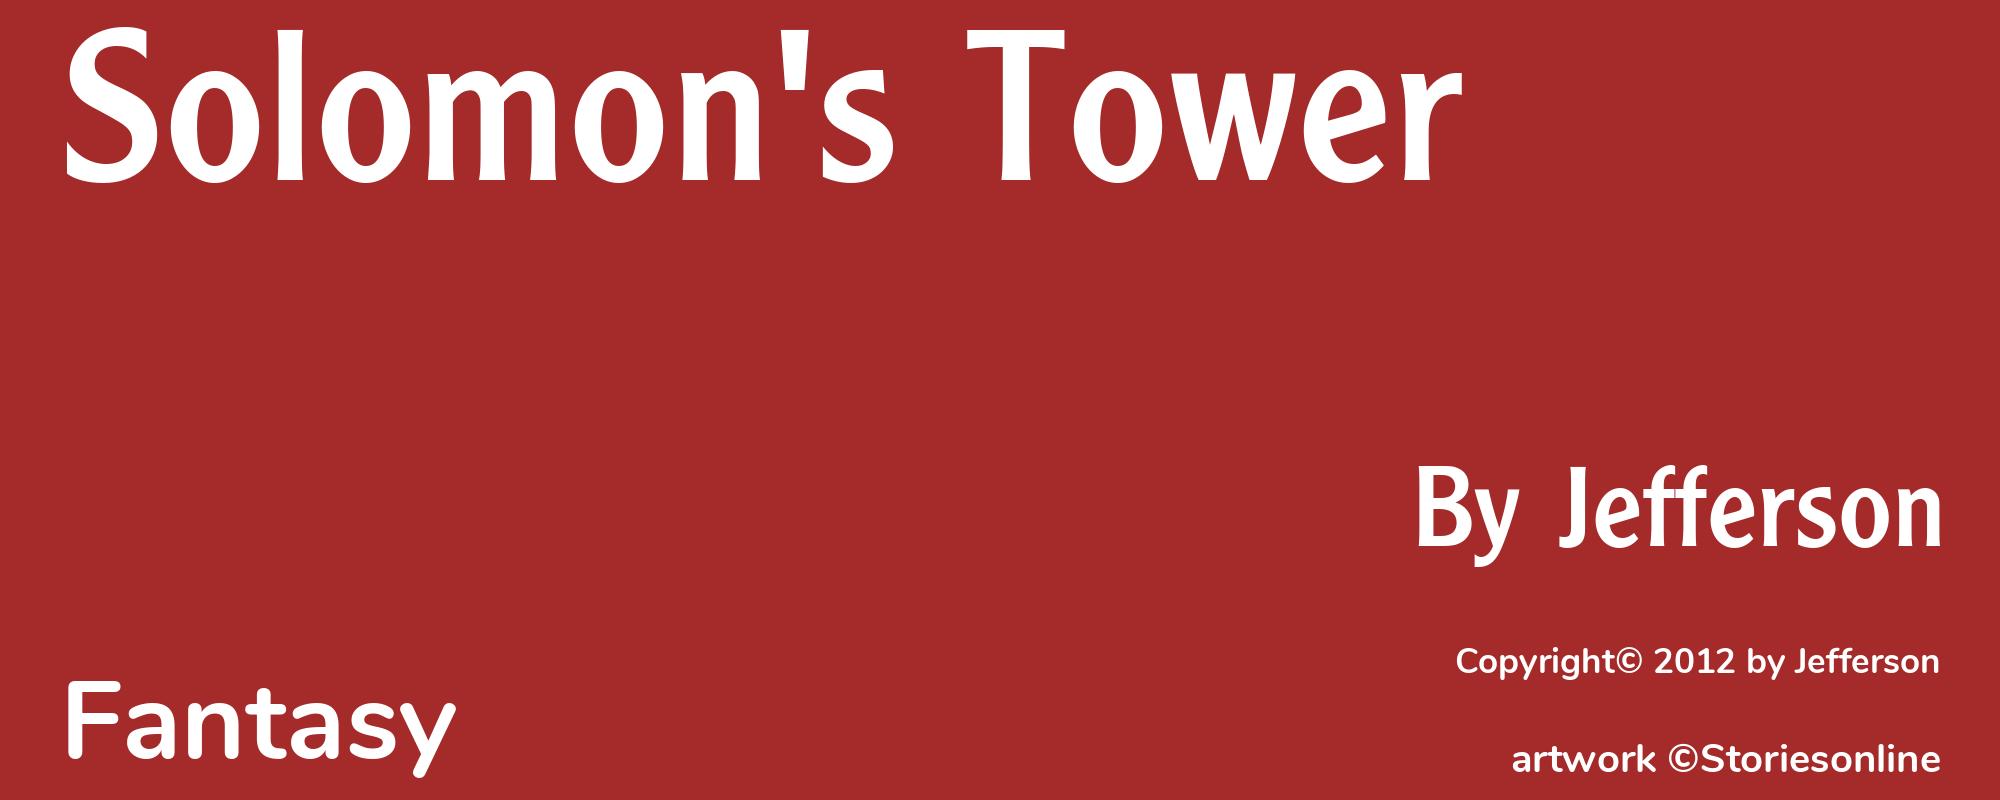 Solomon's Tower - Cover